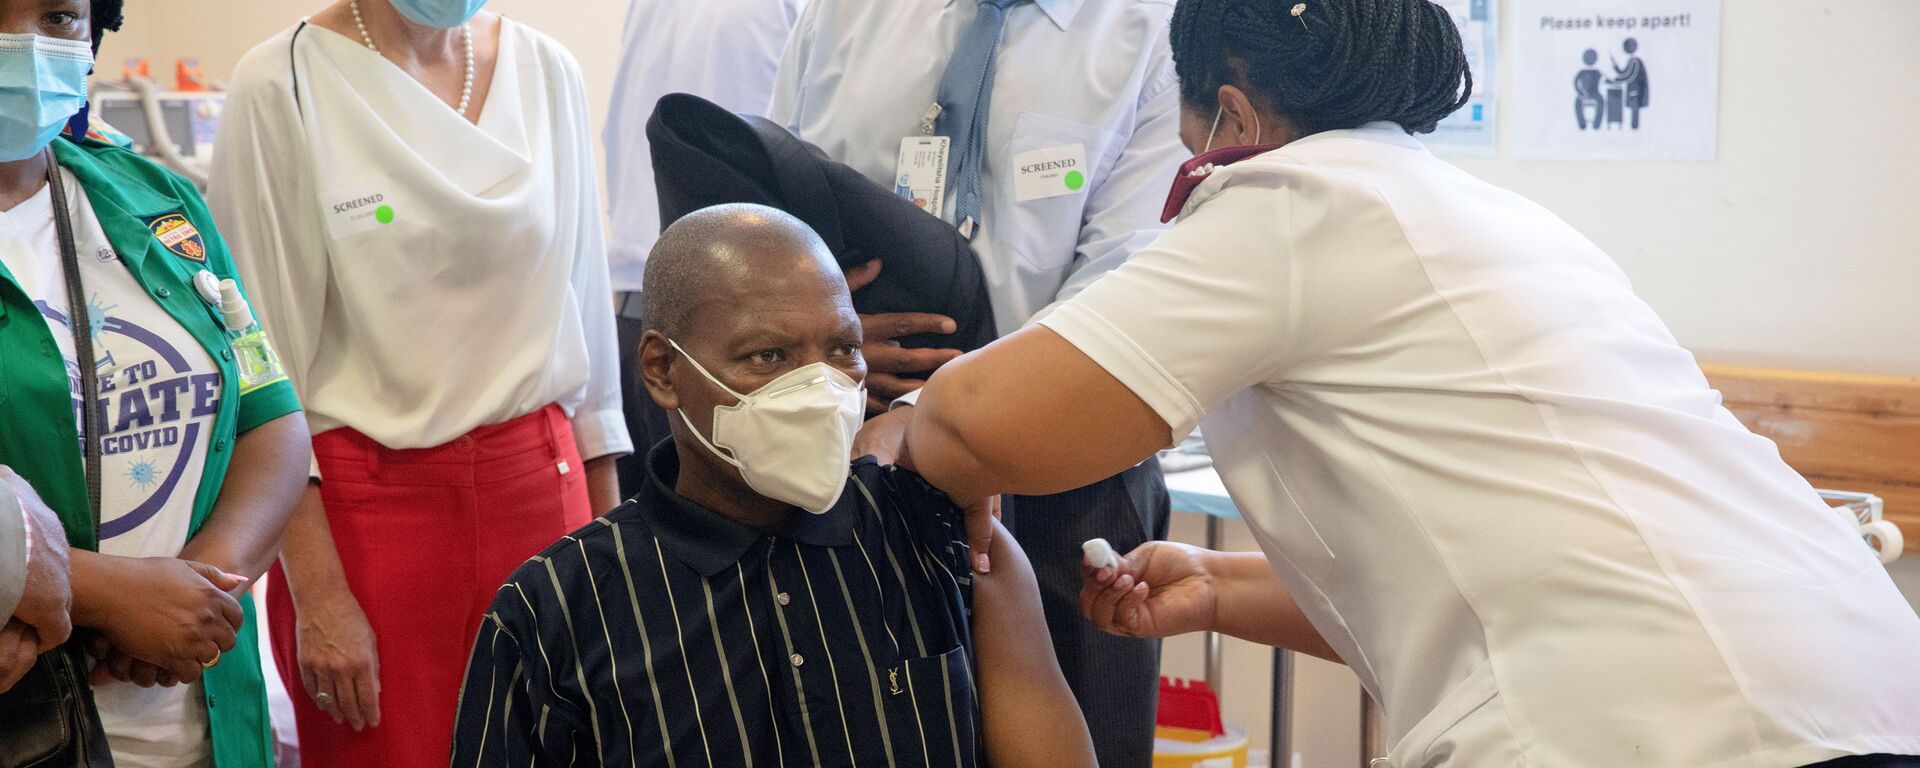 COVID-19 vaccination at Khayelitsha Hospital near Cape Town - Sputnik International, 1920, 02.03.2021